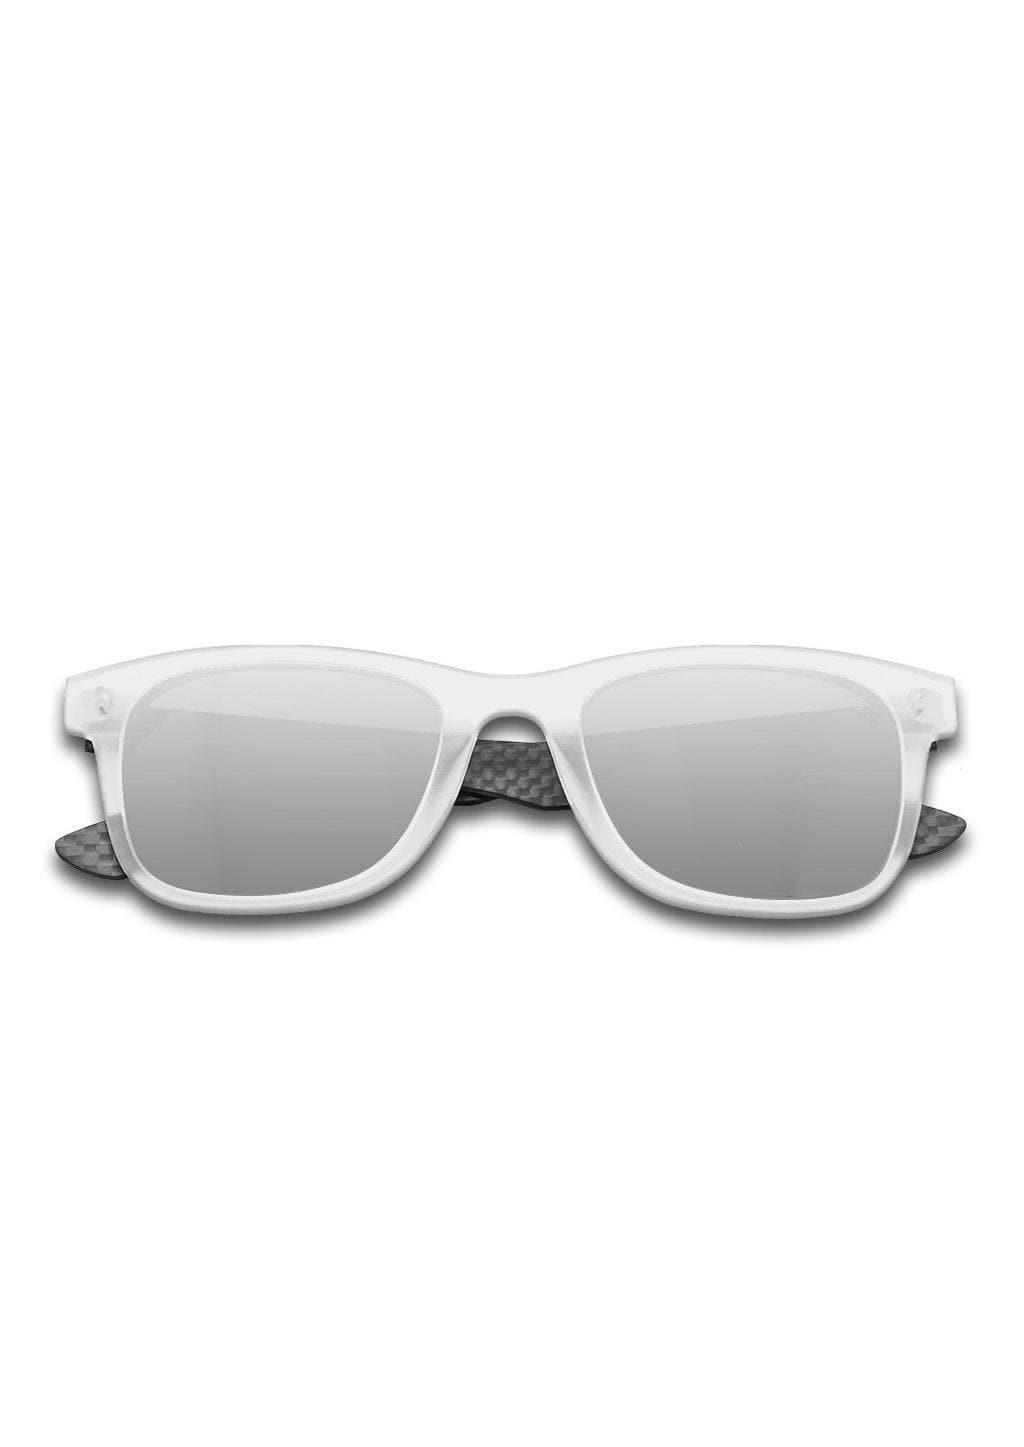 Hybrid - Atom, carbon fiber and acetate sunglasses of the highest quality. Transparent frame with silver mirror lenses.